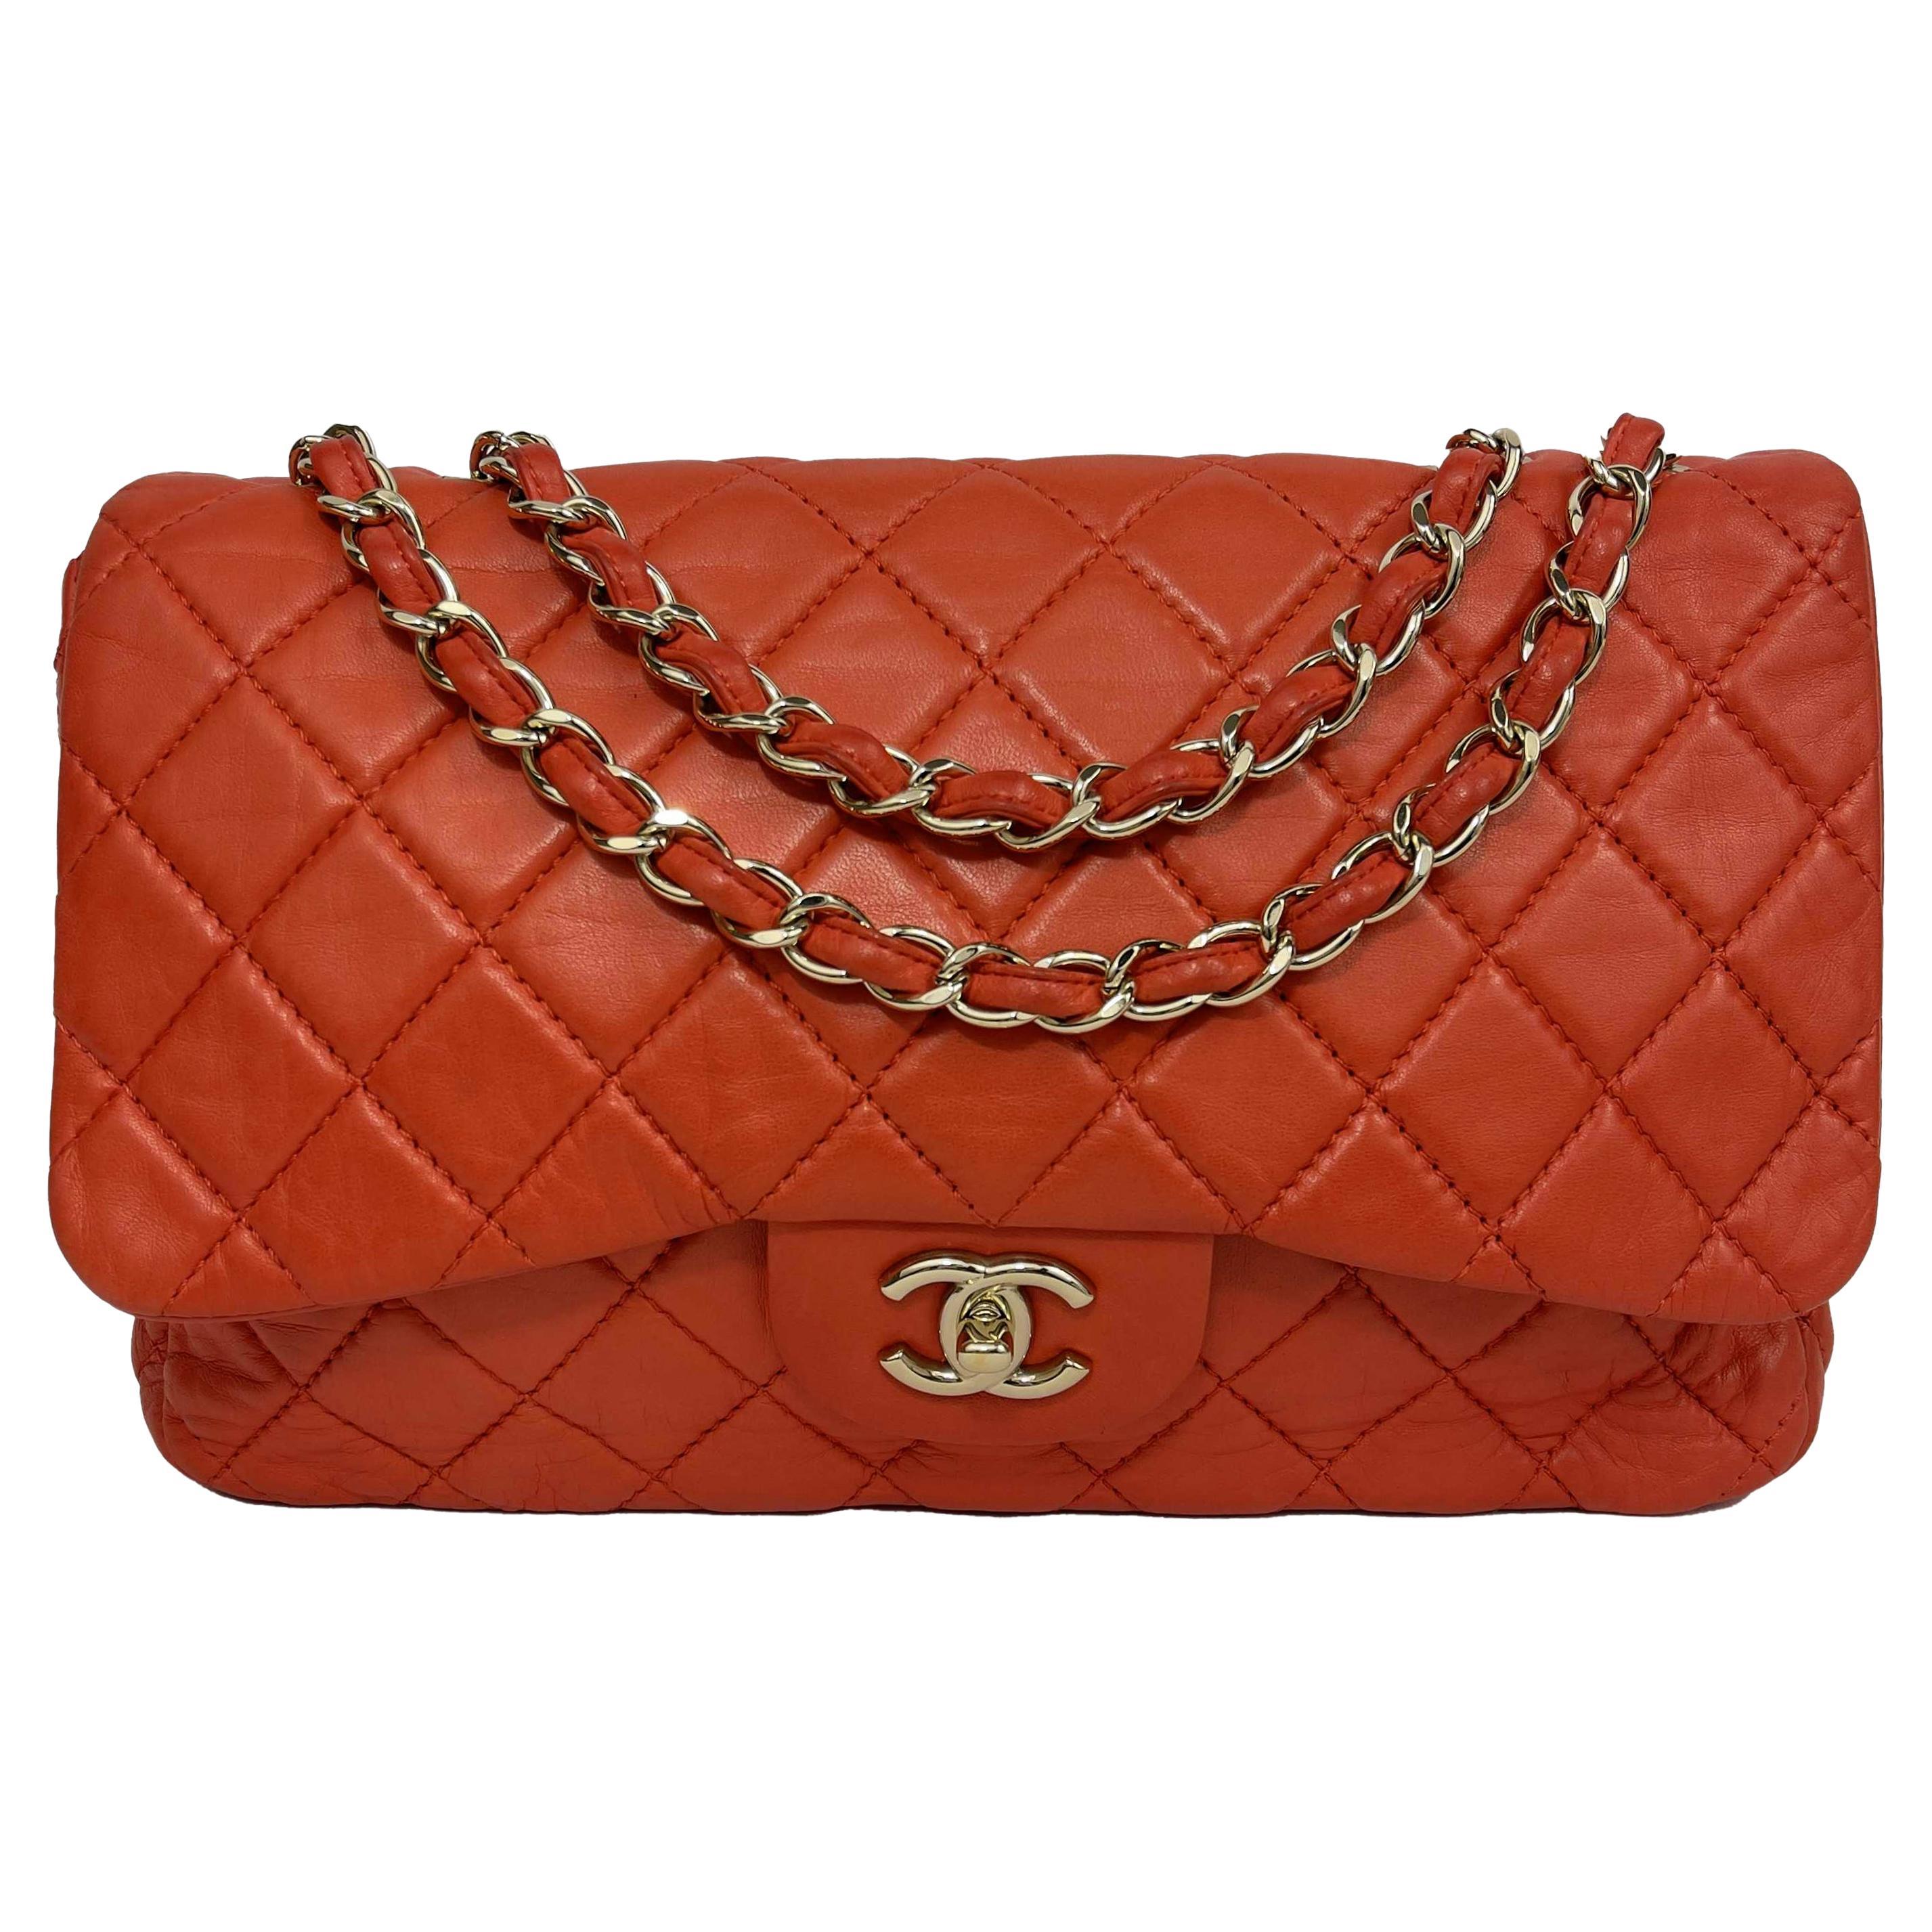 Chanel - Good - Classic Jumbo Single Flap Quilted Lambskin - Handbag For Sale